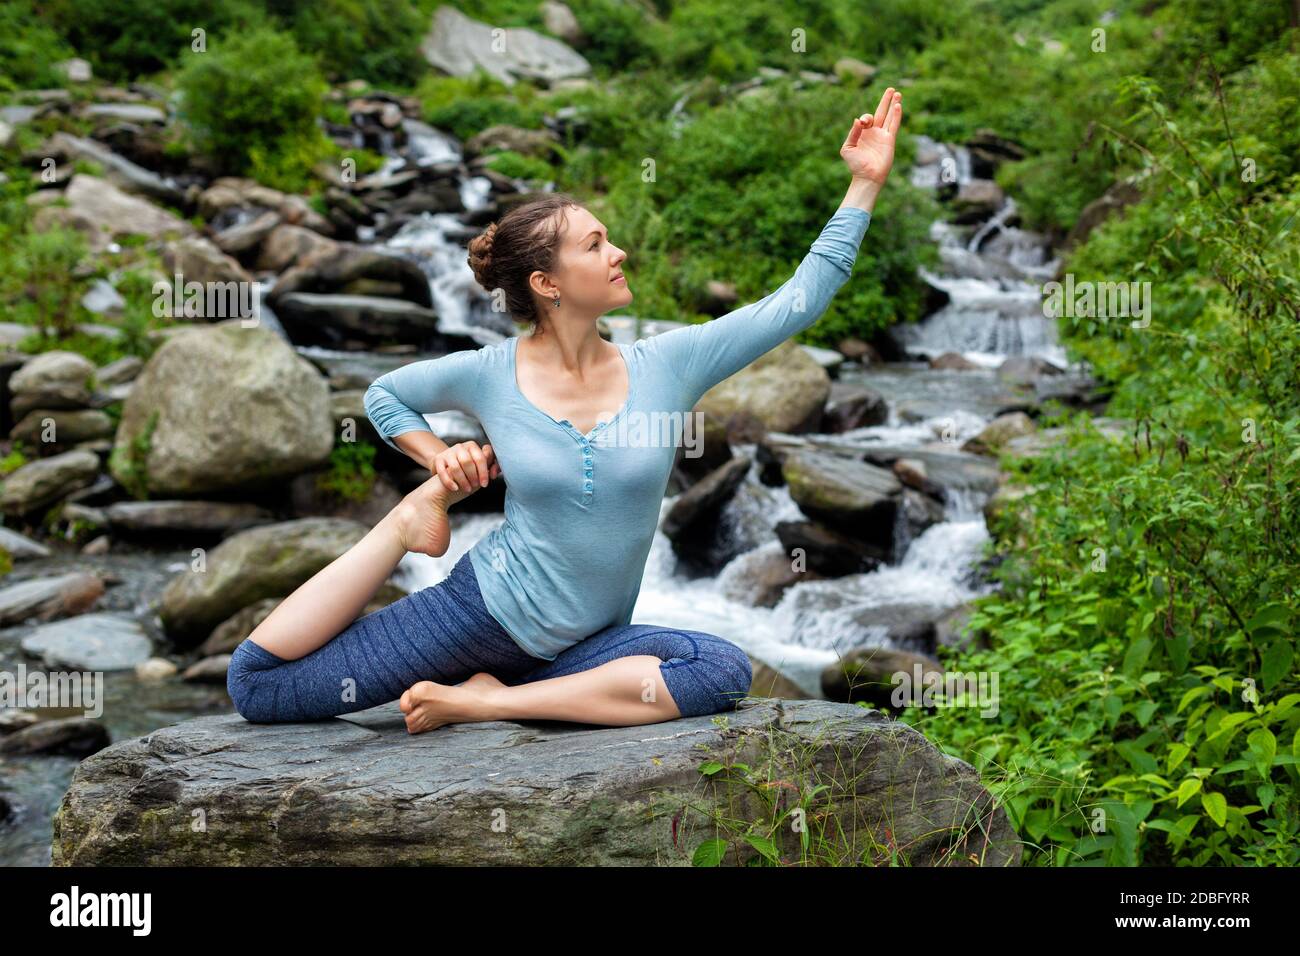 Junge sportliche fit Frau tun Yoga Asana Eka pada rajakapotasana - einbeinigen König Taube Pose bei tropischen Wasserfall. Himachal Pradesh, Indien Stockfoto